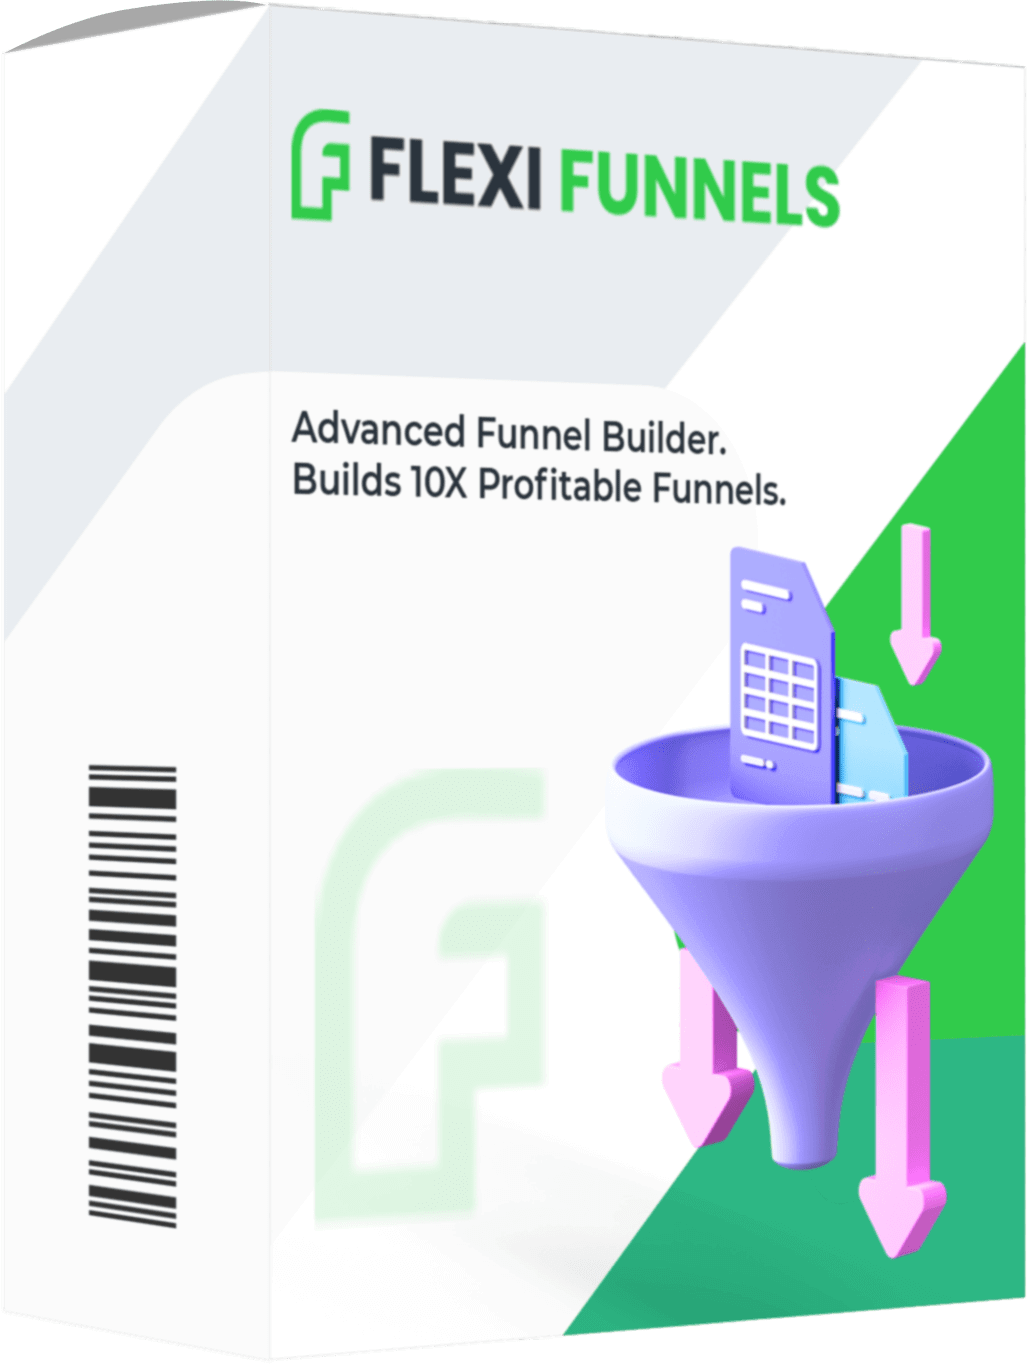 FlexiFunnels Review